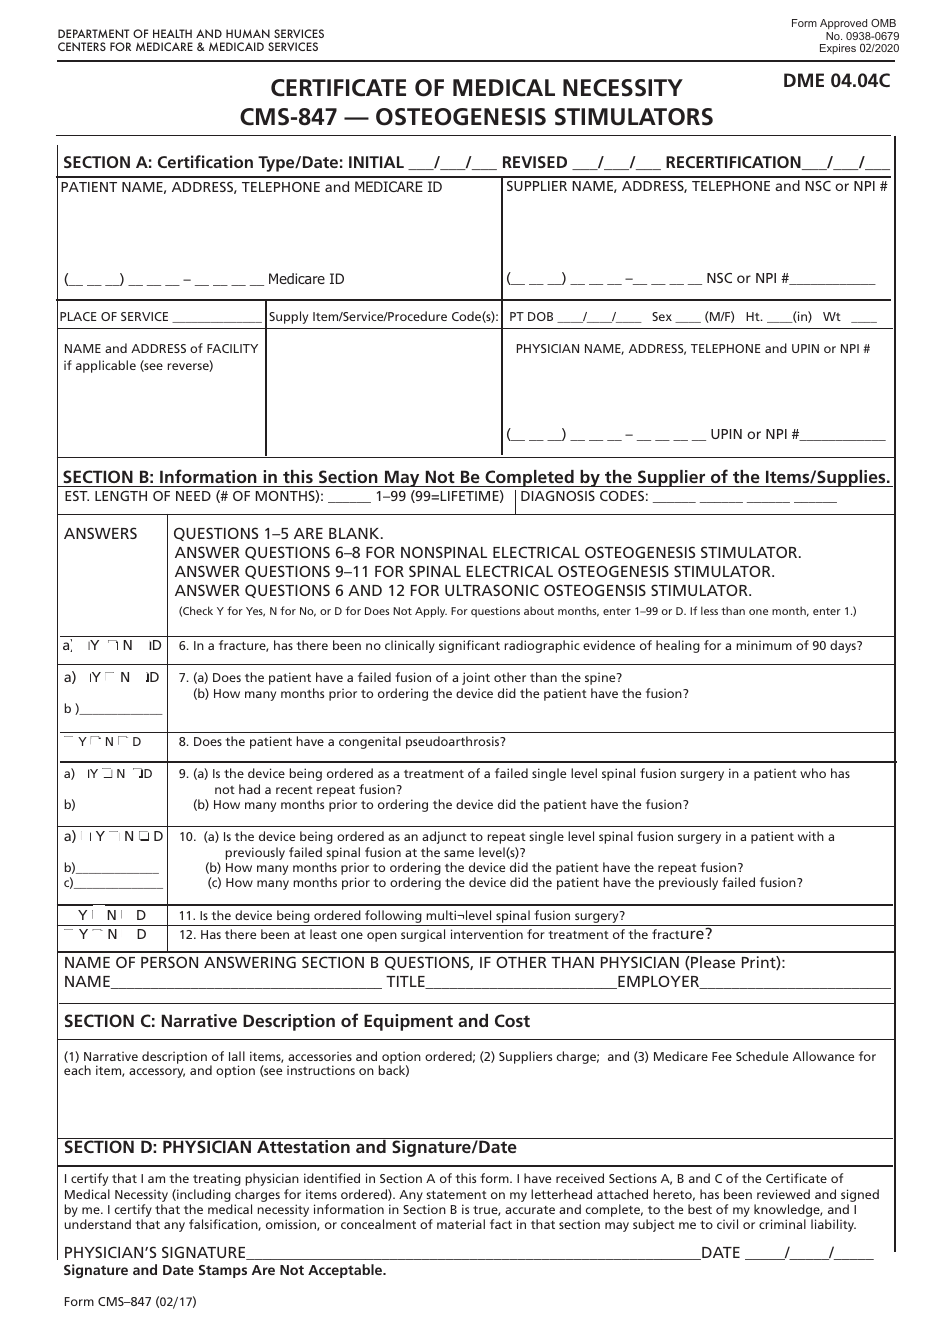 Form CMS-847 Certificate of Medical Necessity - Osteogenesis Stimulators, Page 1